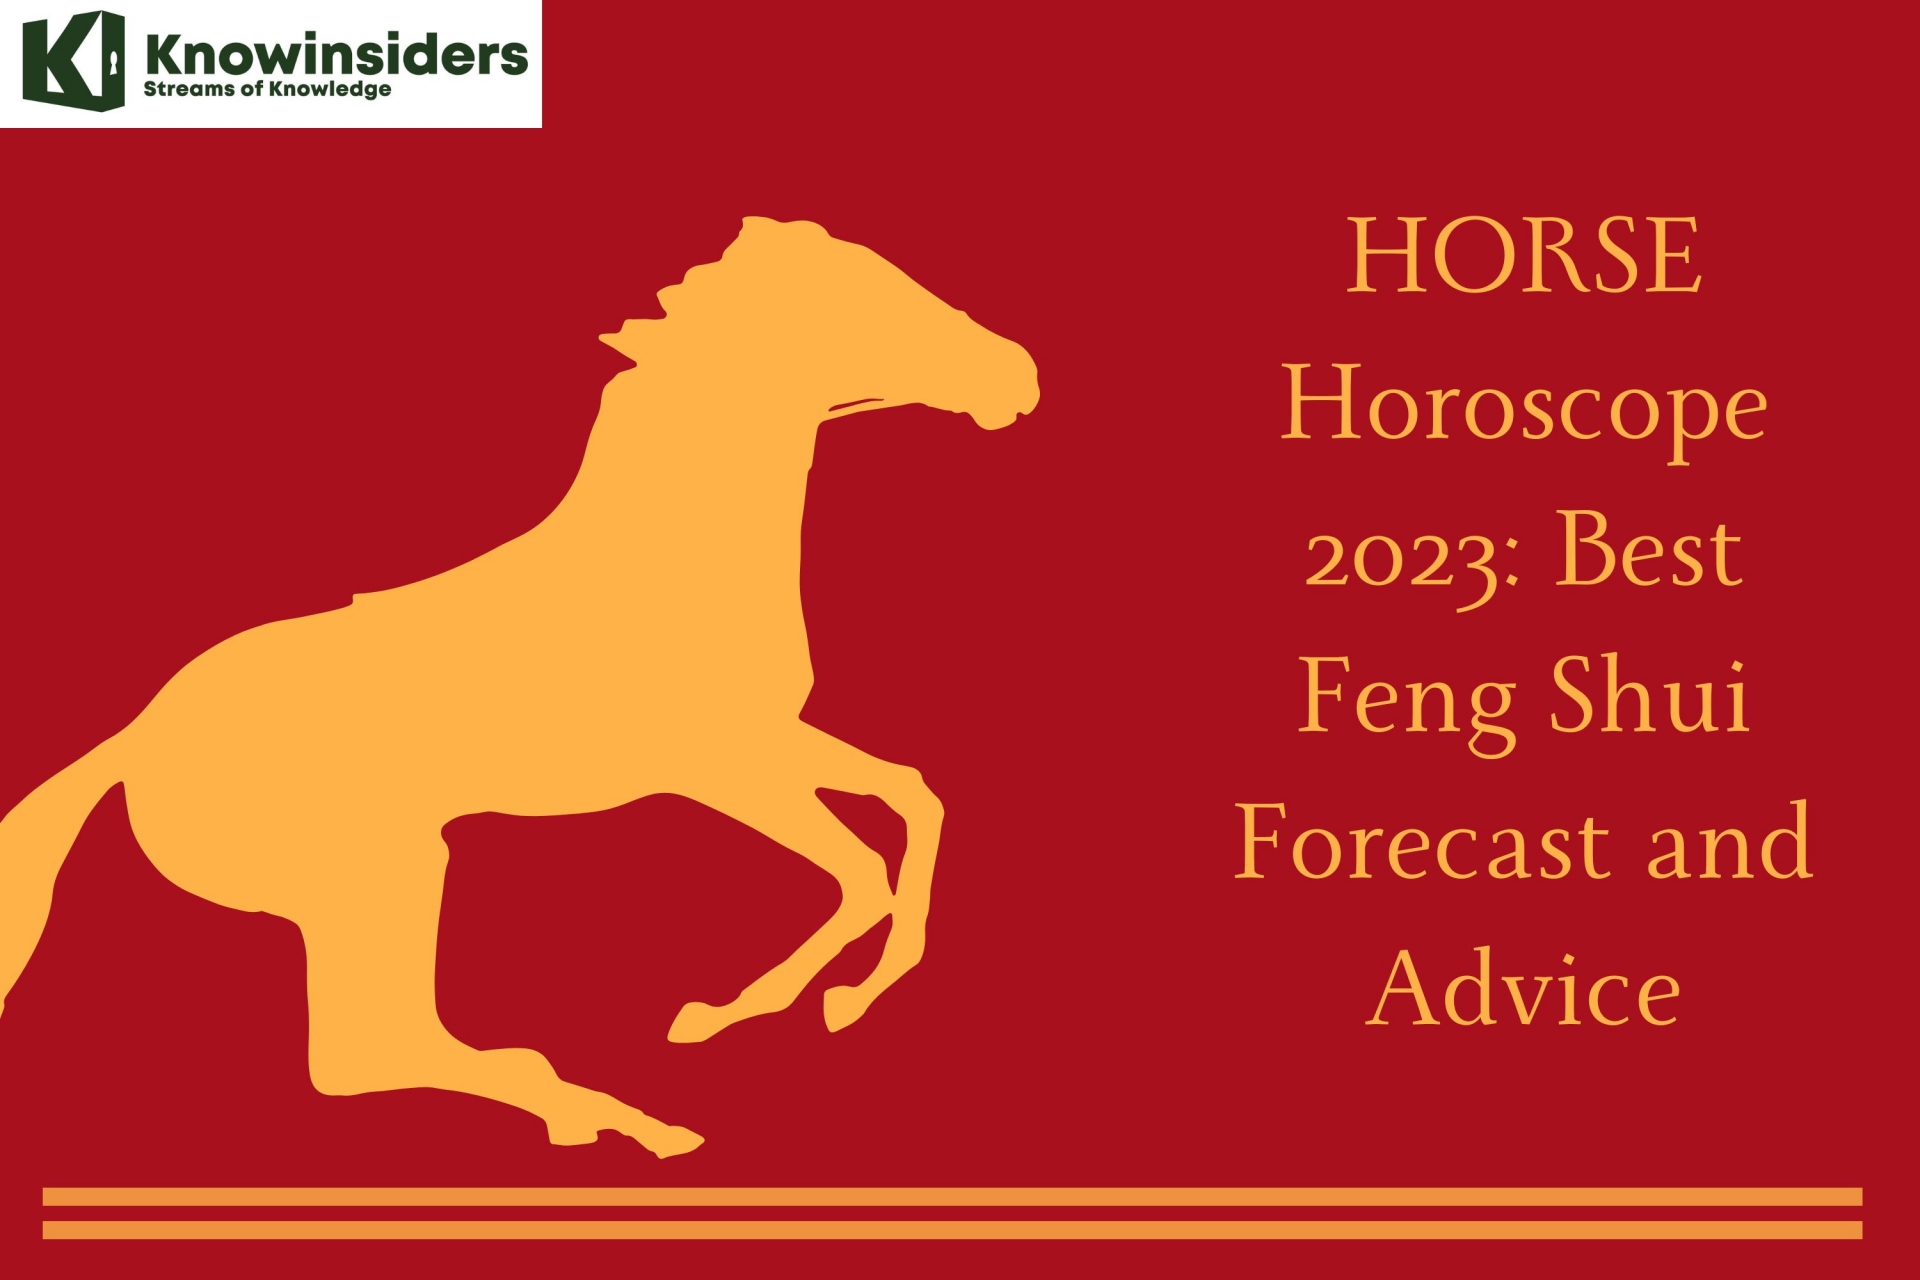 HORSE Horoscope 2023: Best Feng Shui Forecast and Advice